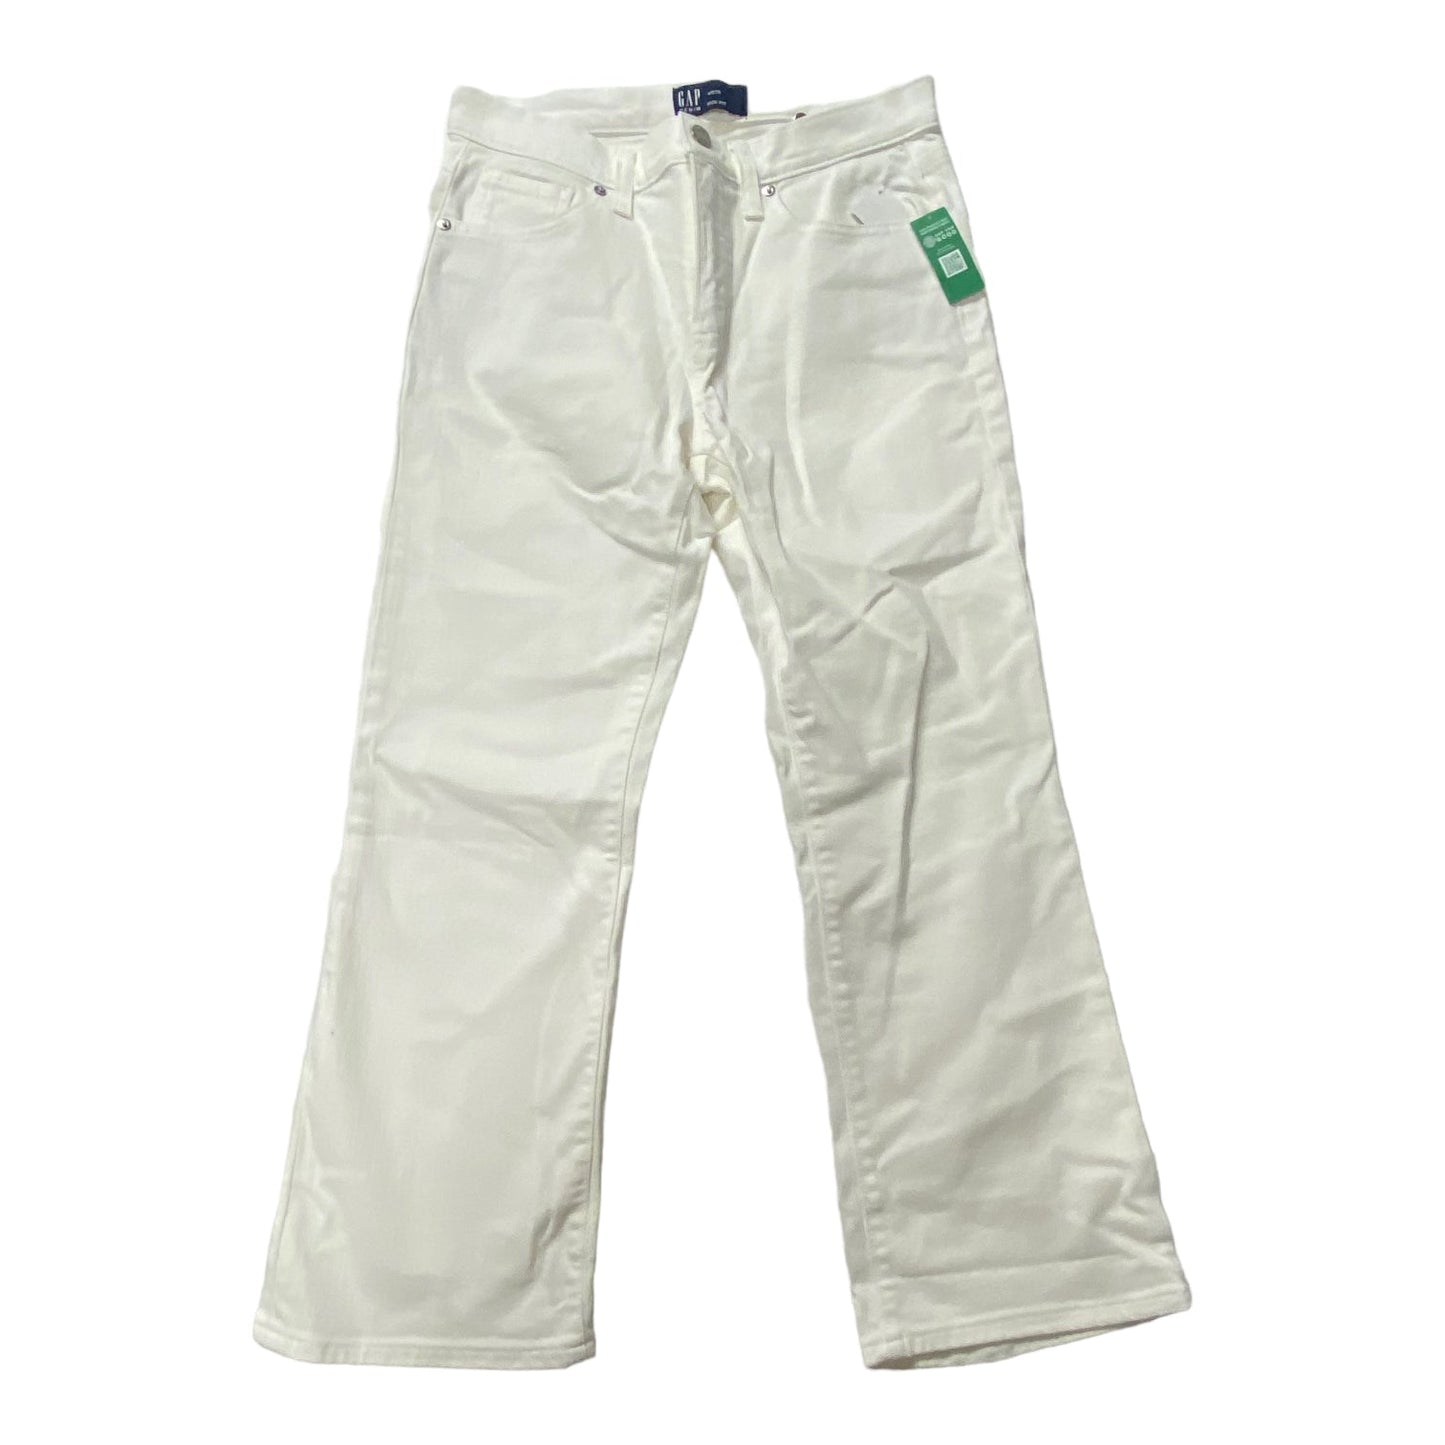 White Jeans Cropped Gap, Size 4